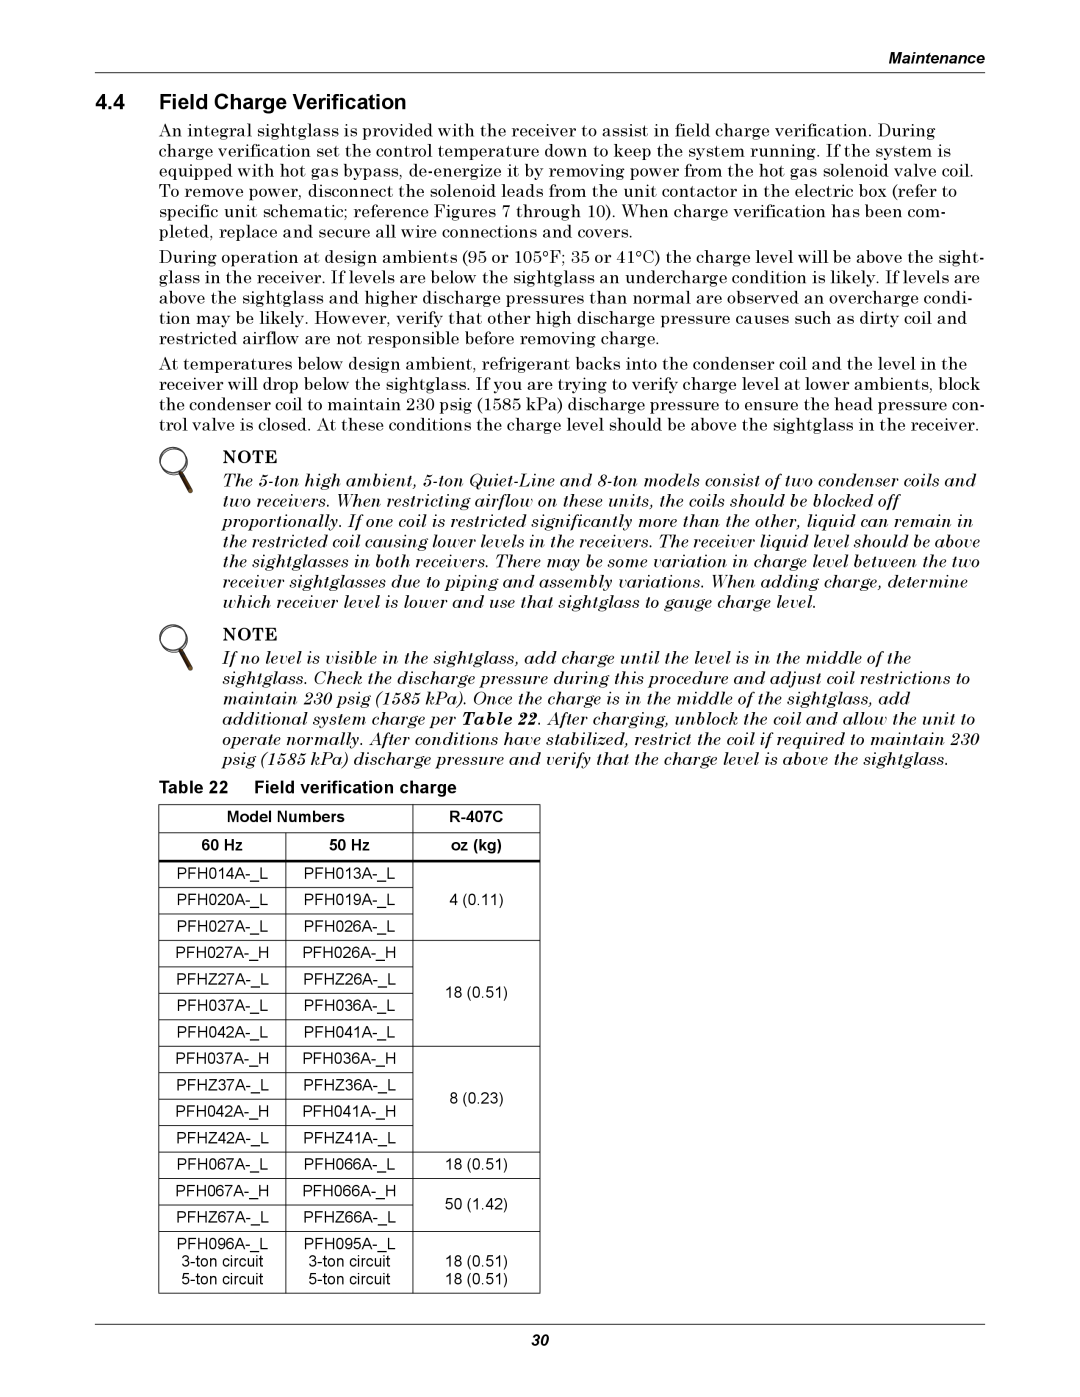 Emerson Figure i manual 4.4Field Charge Verification, Field verification charge 